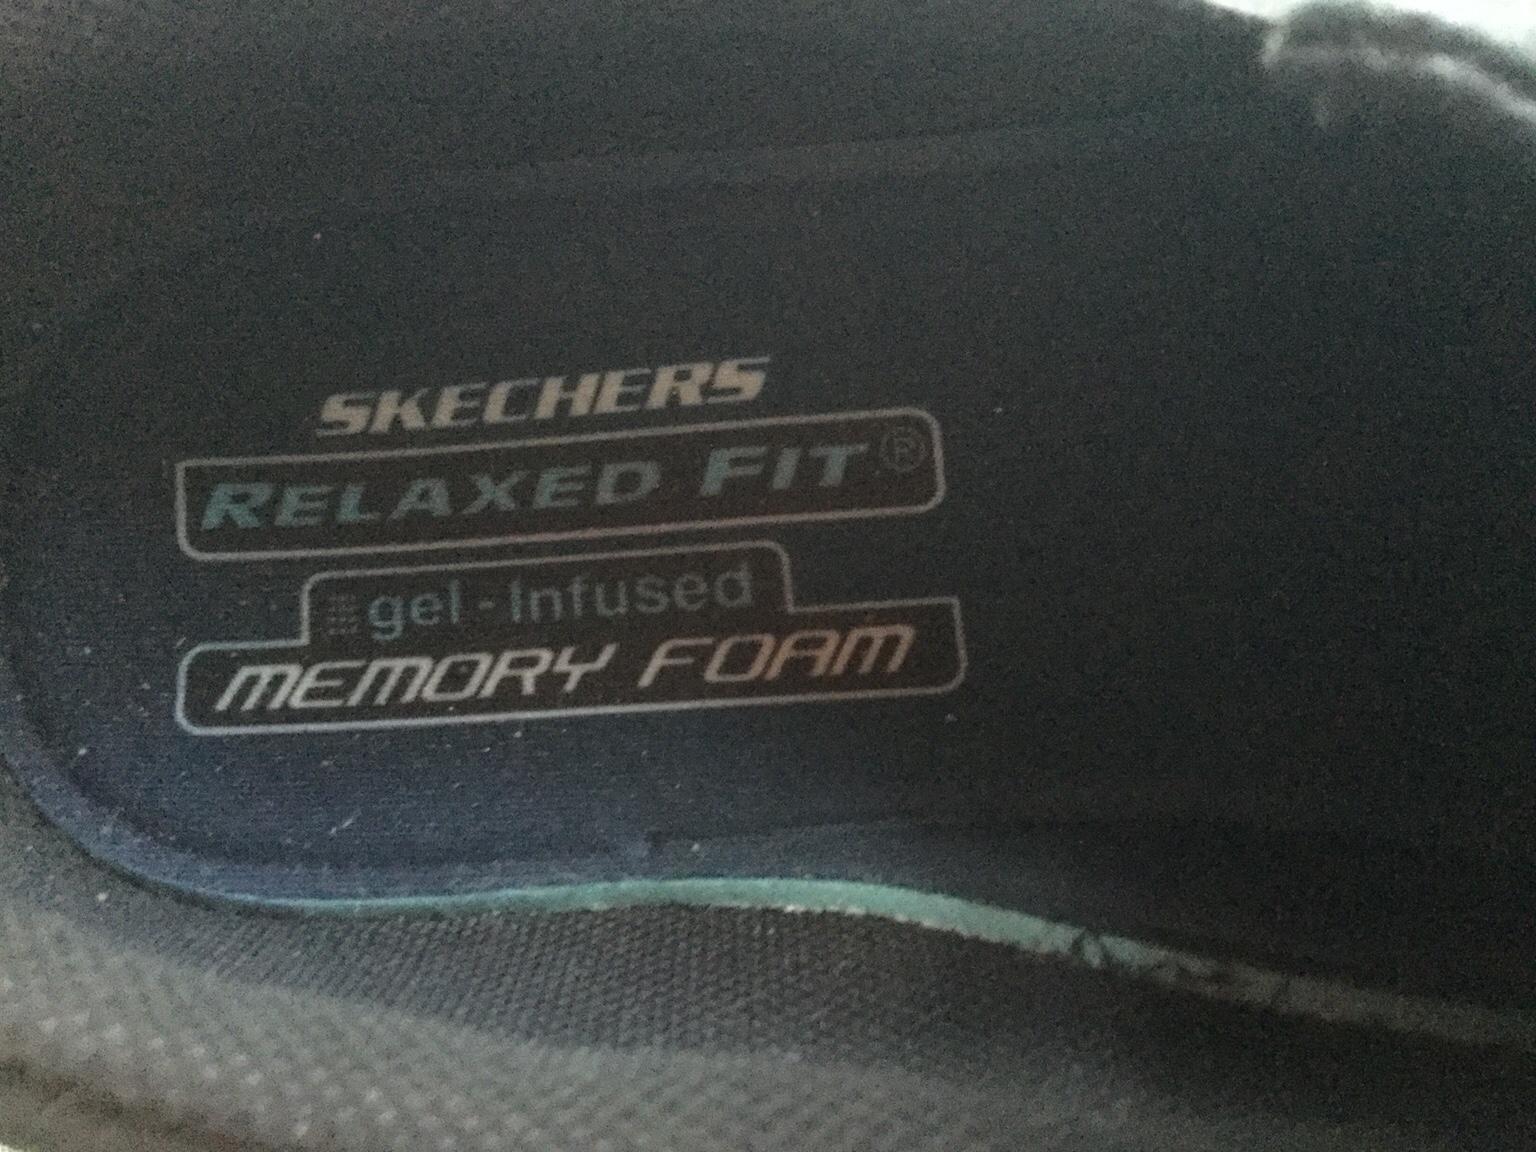 skechers relaxed fit gel infused memory foam